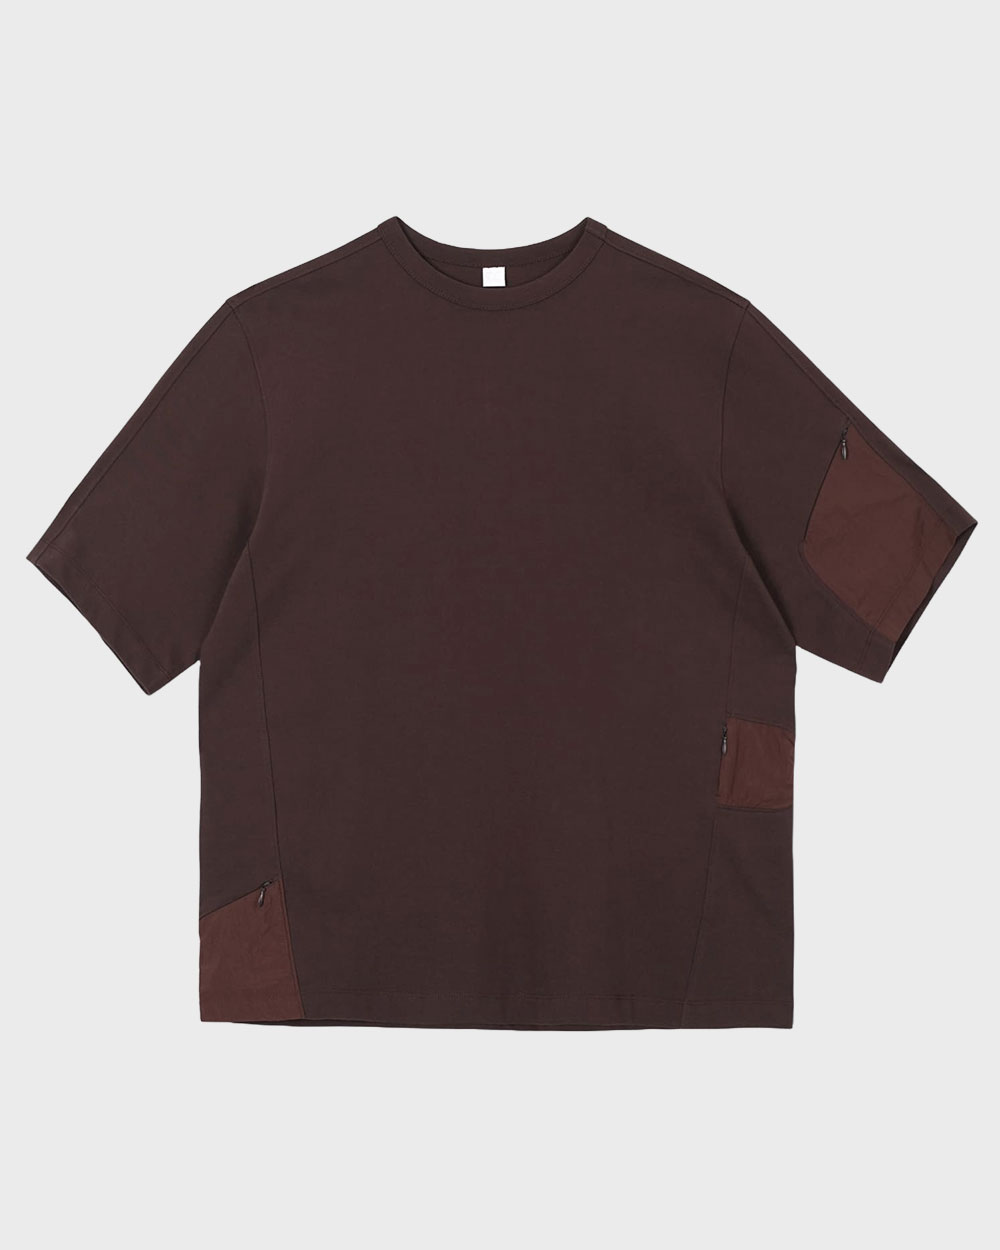 Pocket T-Shirts (Brown)